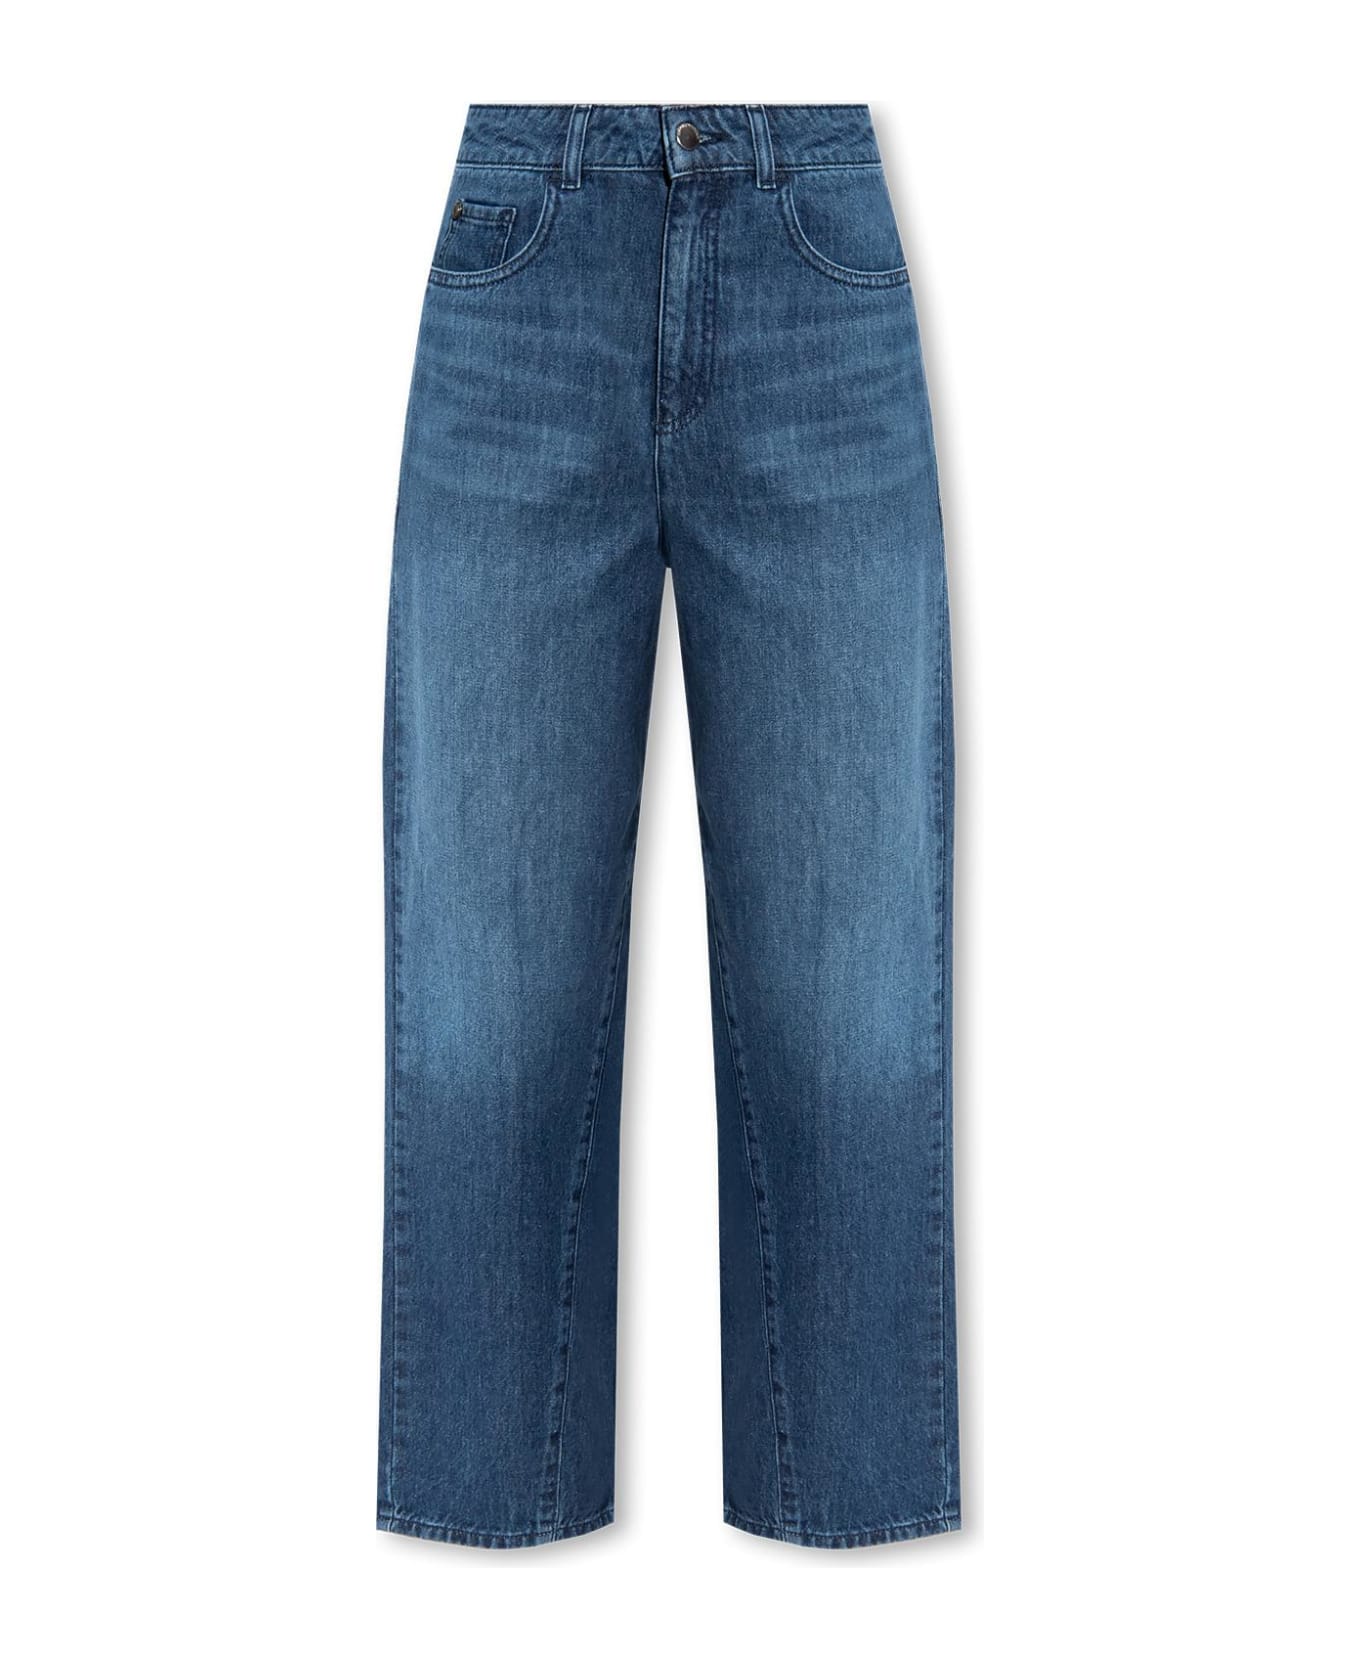 Emporio Armani Regular Fit Jeans - Denim Blu デニム